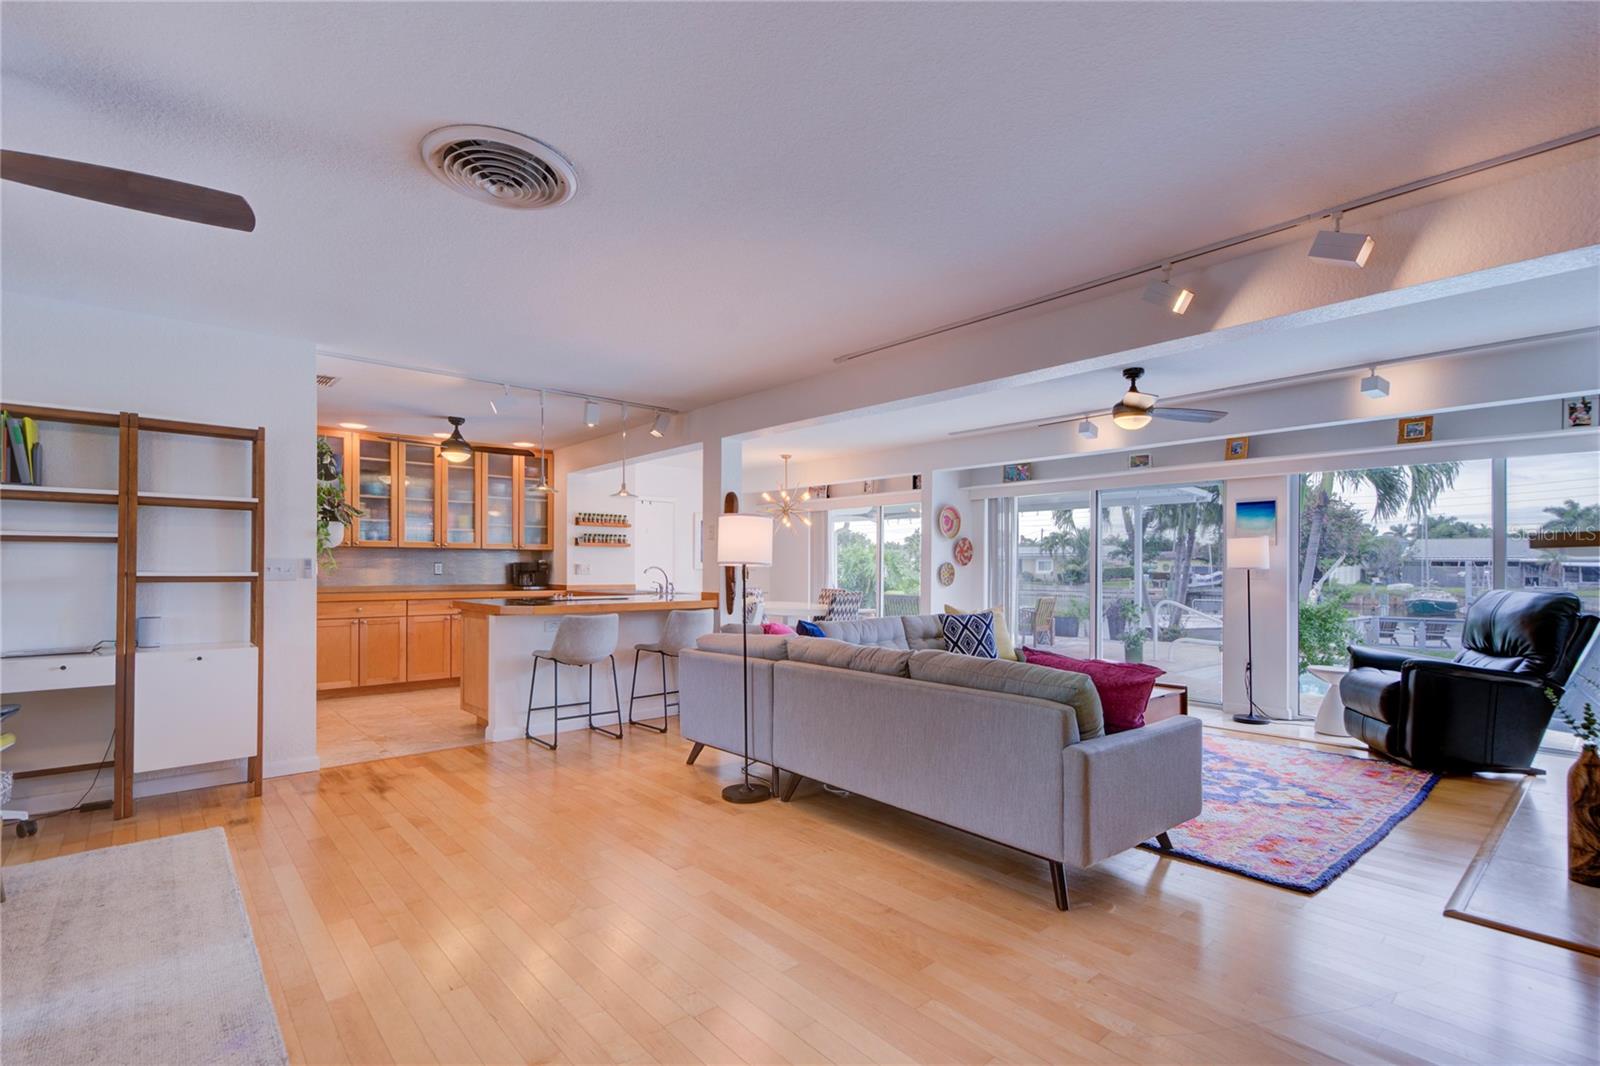 Enter into beautiful open floor plan living room, dining room, kitchen.